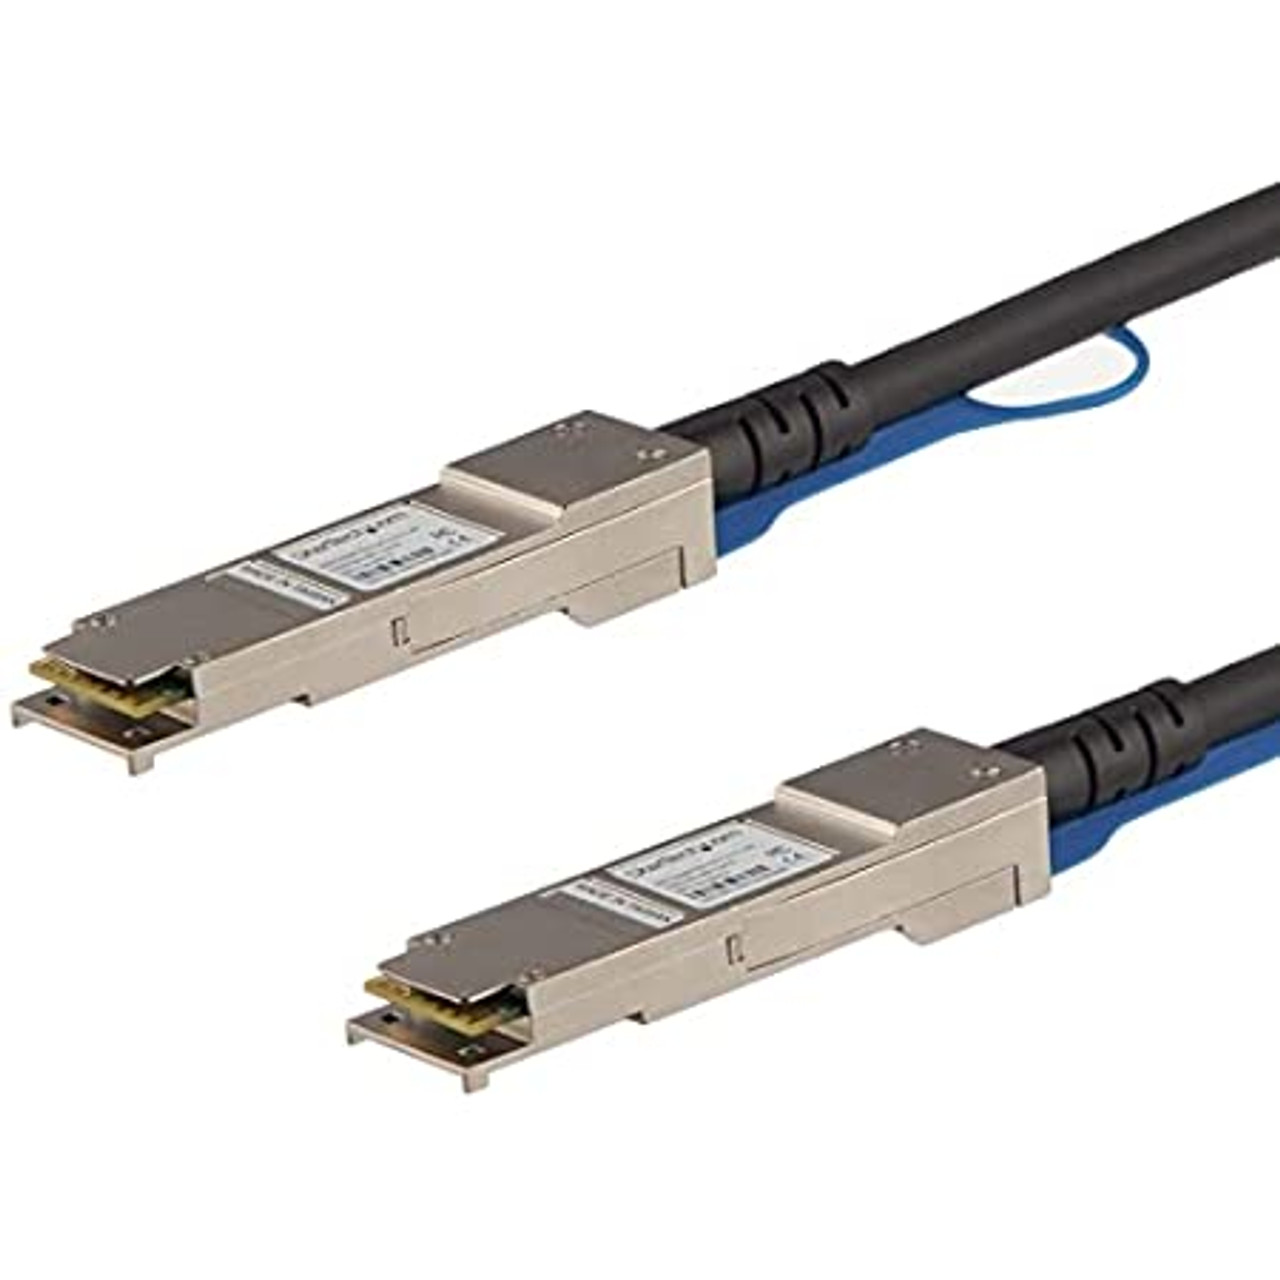 MSA Compliant QSFP+ Active Optical Cable - 7 m (23 ft)